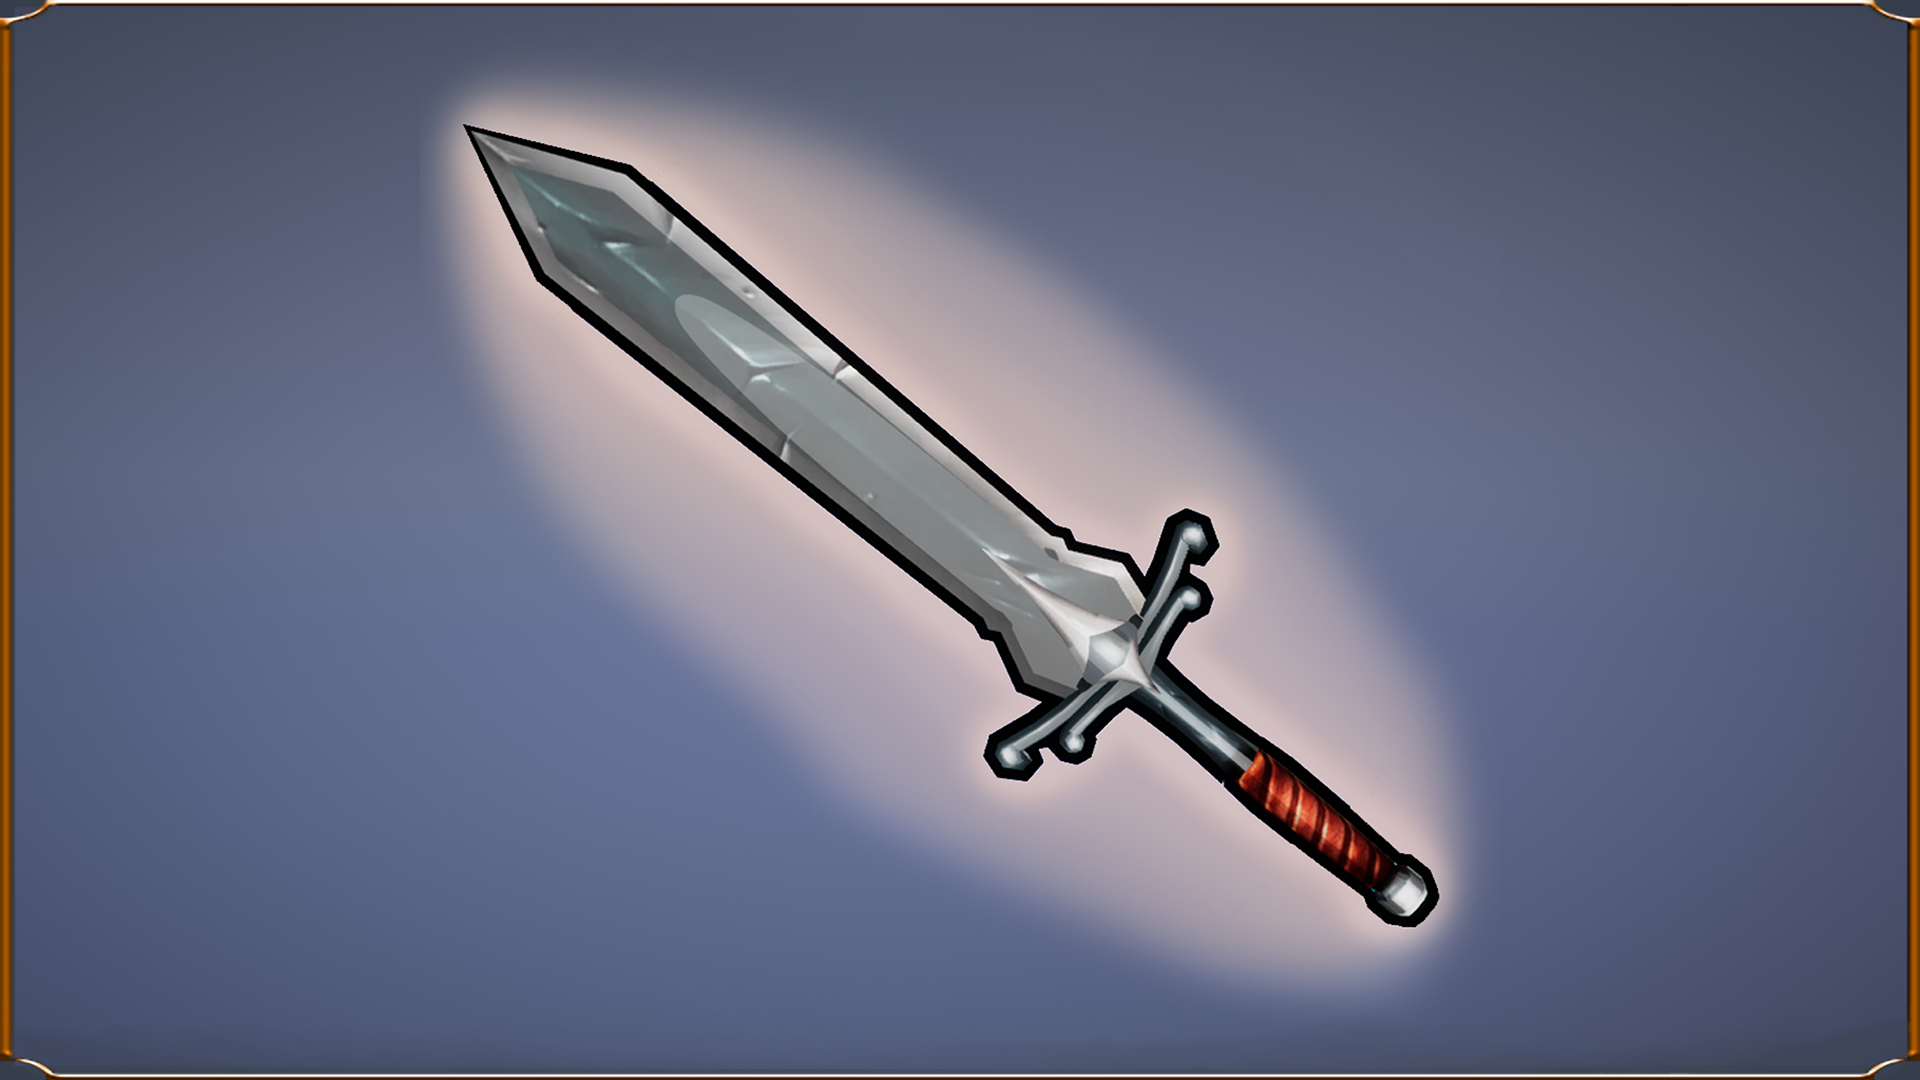 Icon for Legendary Swordsman